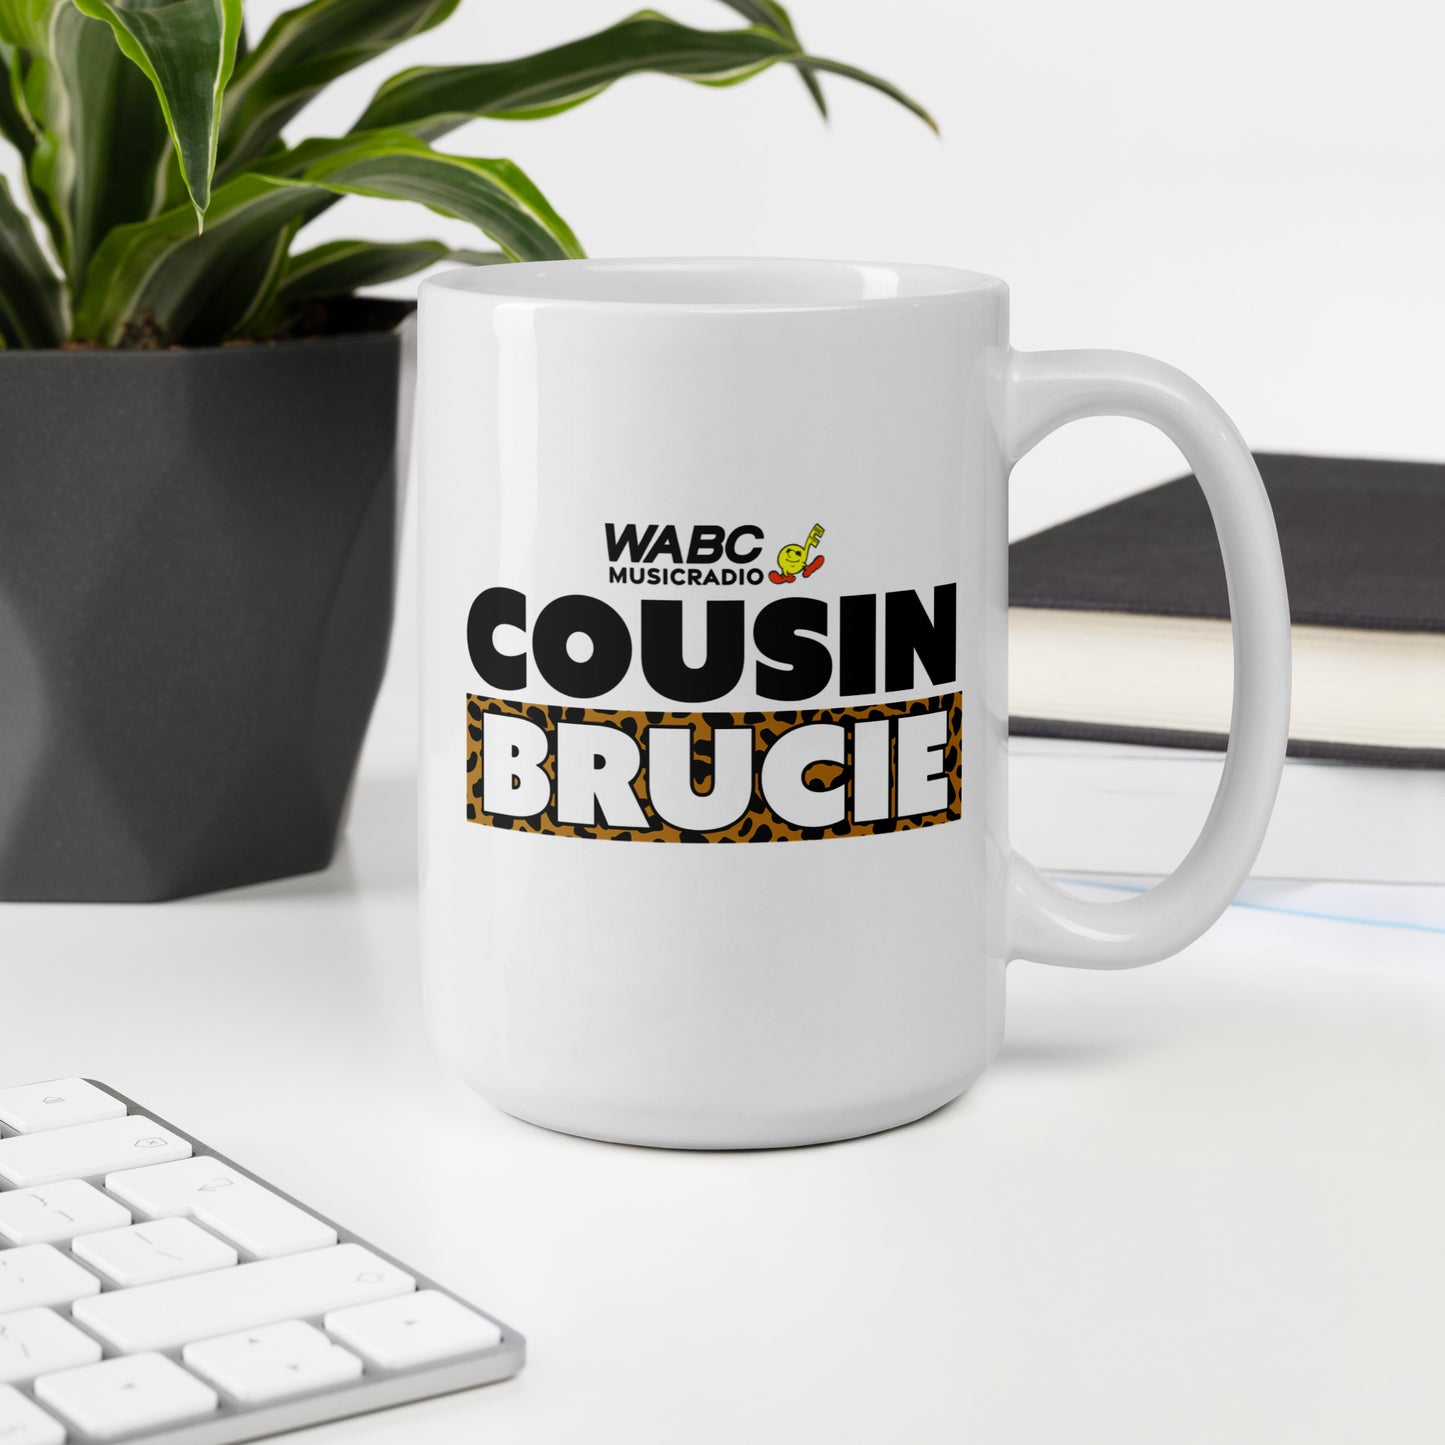 Cousin Brucie White glossy mug - New Design!